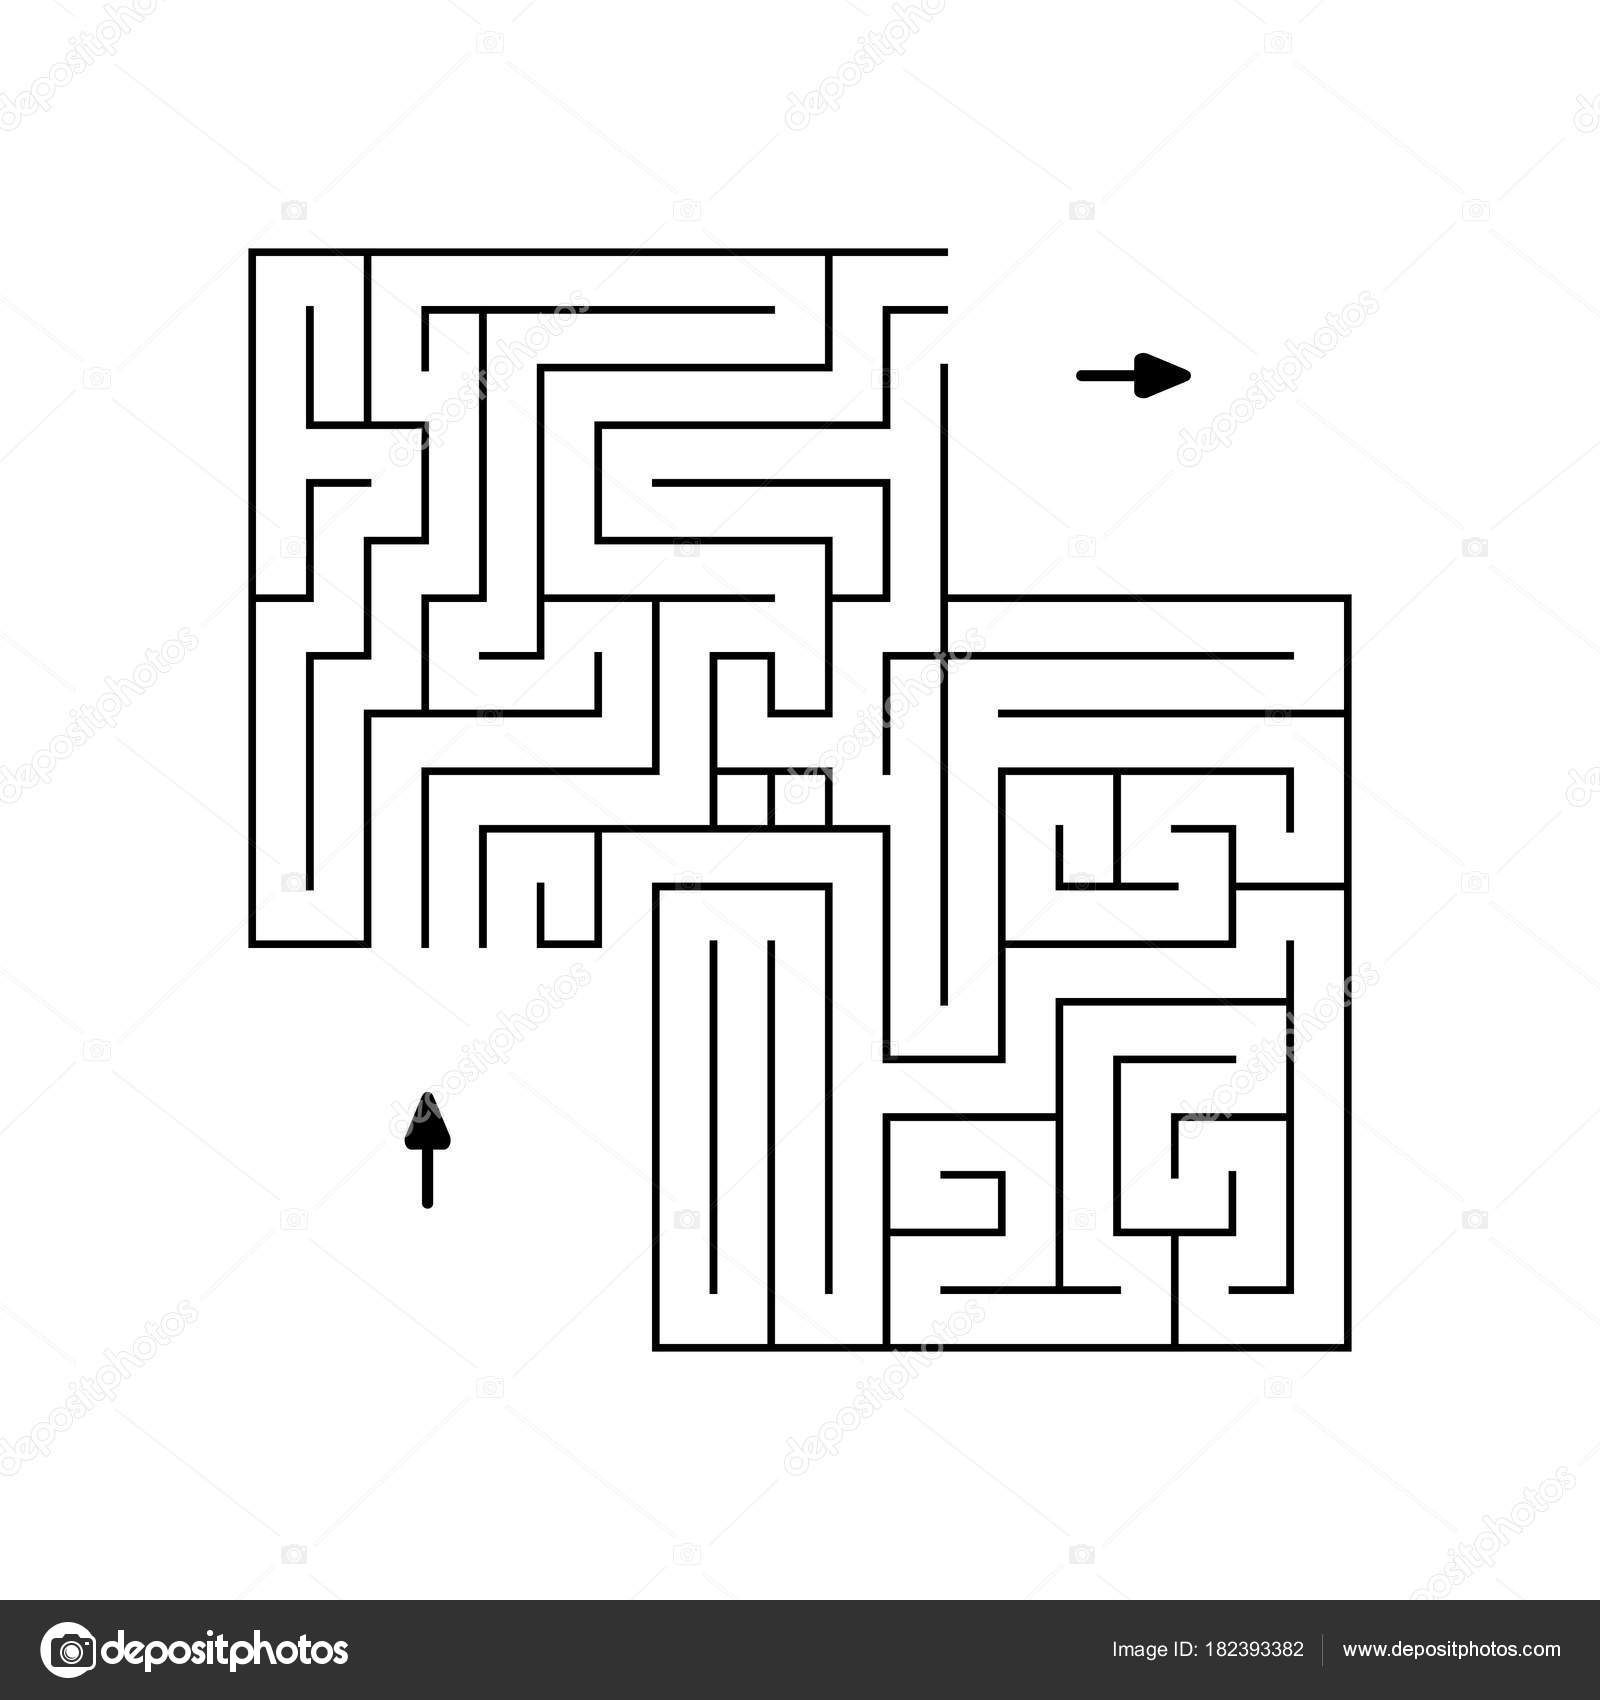 https://st3.depositphotos.com/13489778/18239/v/1600/depositphotos_182393382-stock-illustration-simple-labyrinth-of-black-lines.jpg